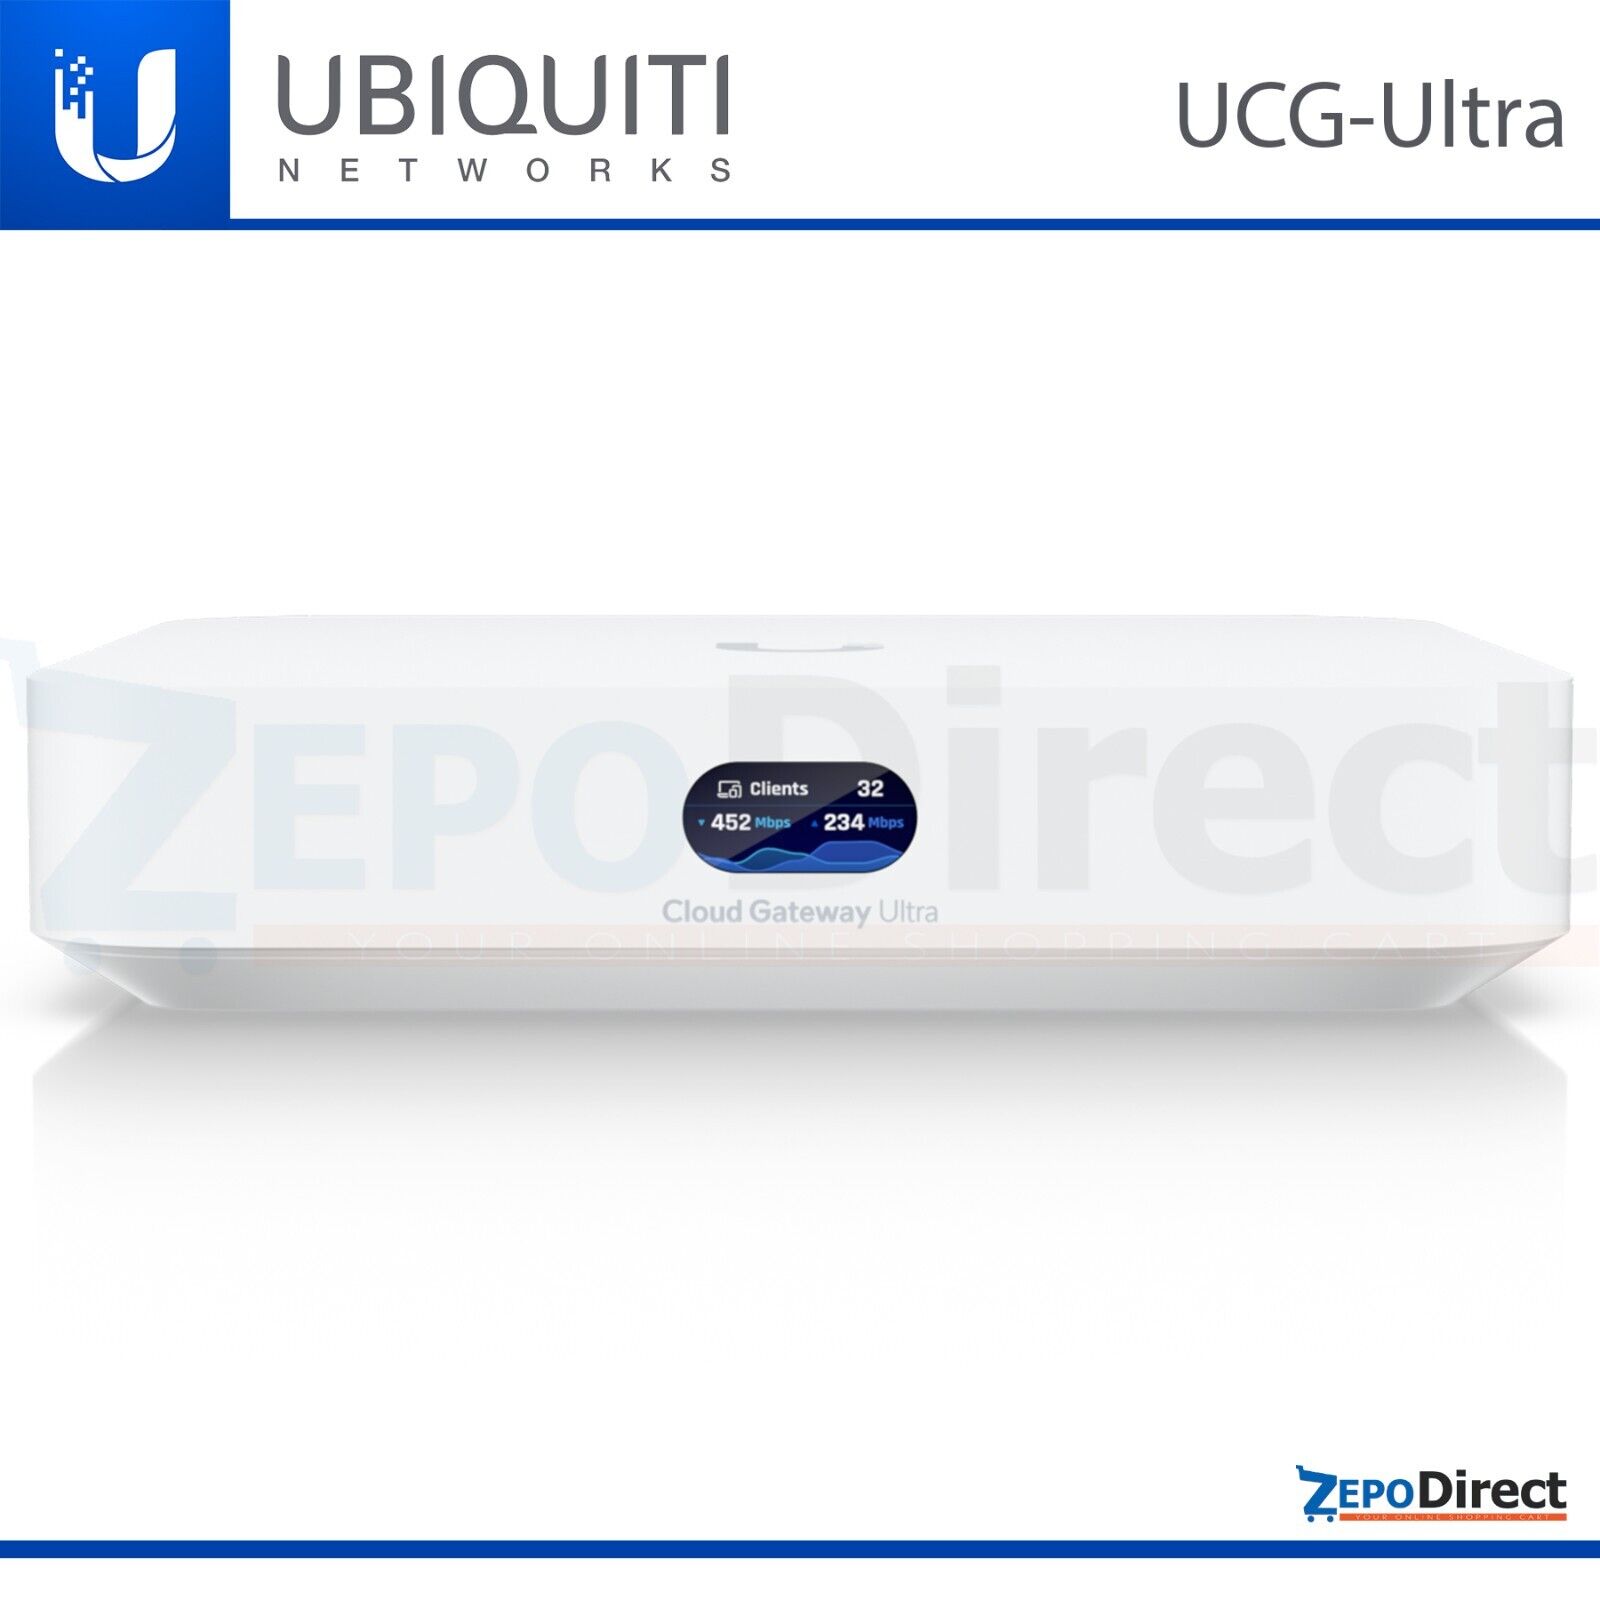 Ubiquiti Networks Unifi Managed 4 Port Cloud Gateway Ultra, UCG-Ultra